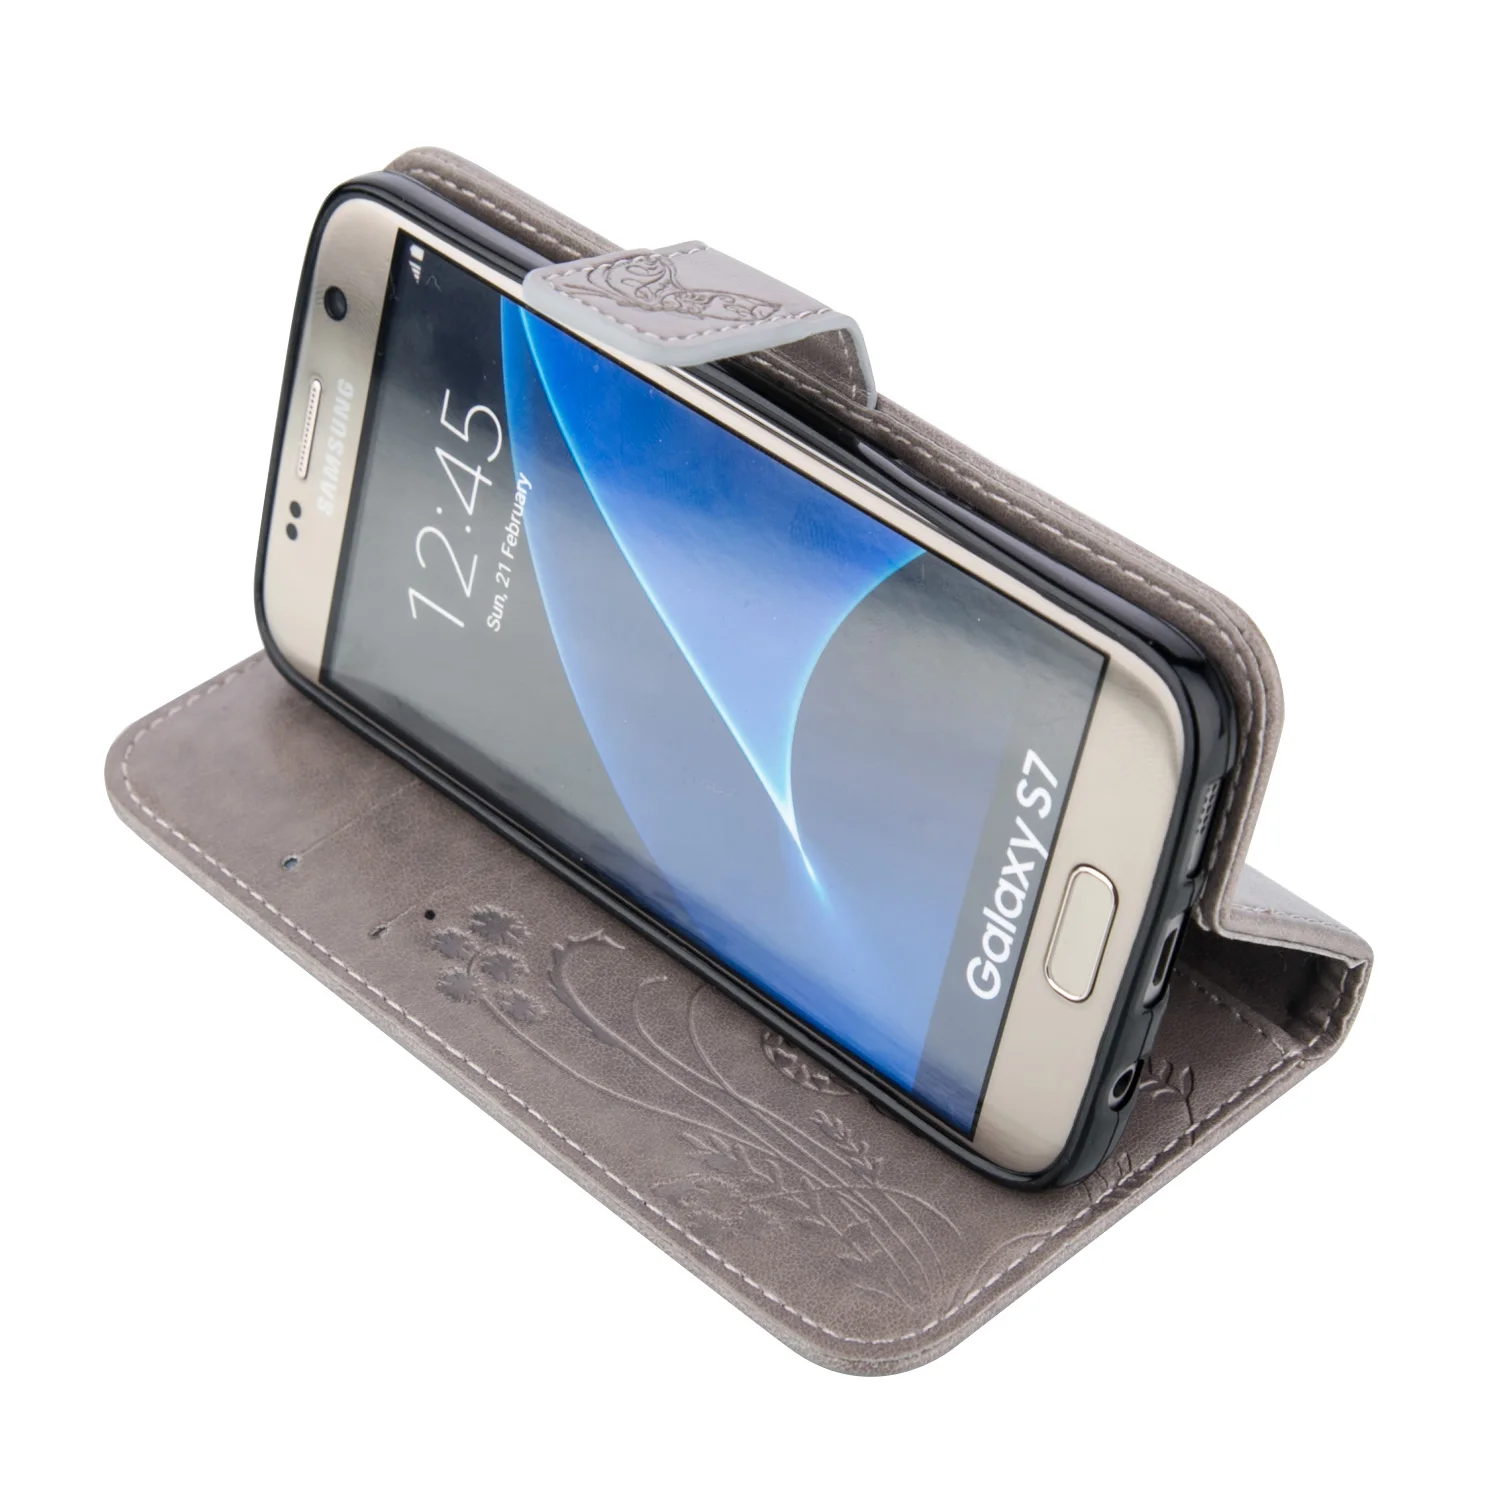 Кожаный Бумажник Case Для Samsung Galaxy S7 Edge S6 S4 S3 S5 Neo J7 J1 Mini A3 A5 Note 4 G360 Core Grand Prime J5 G530 J3 Case